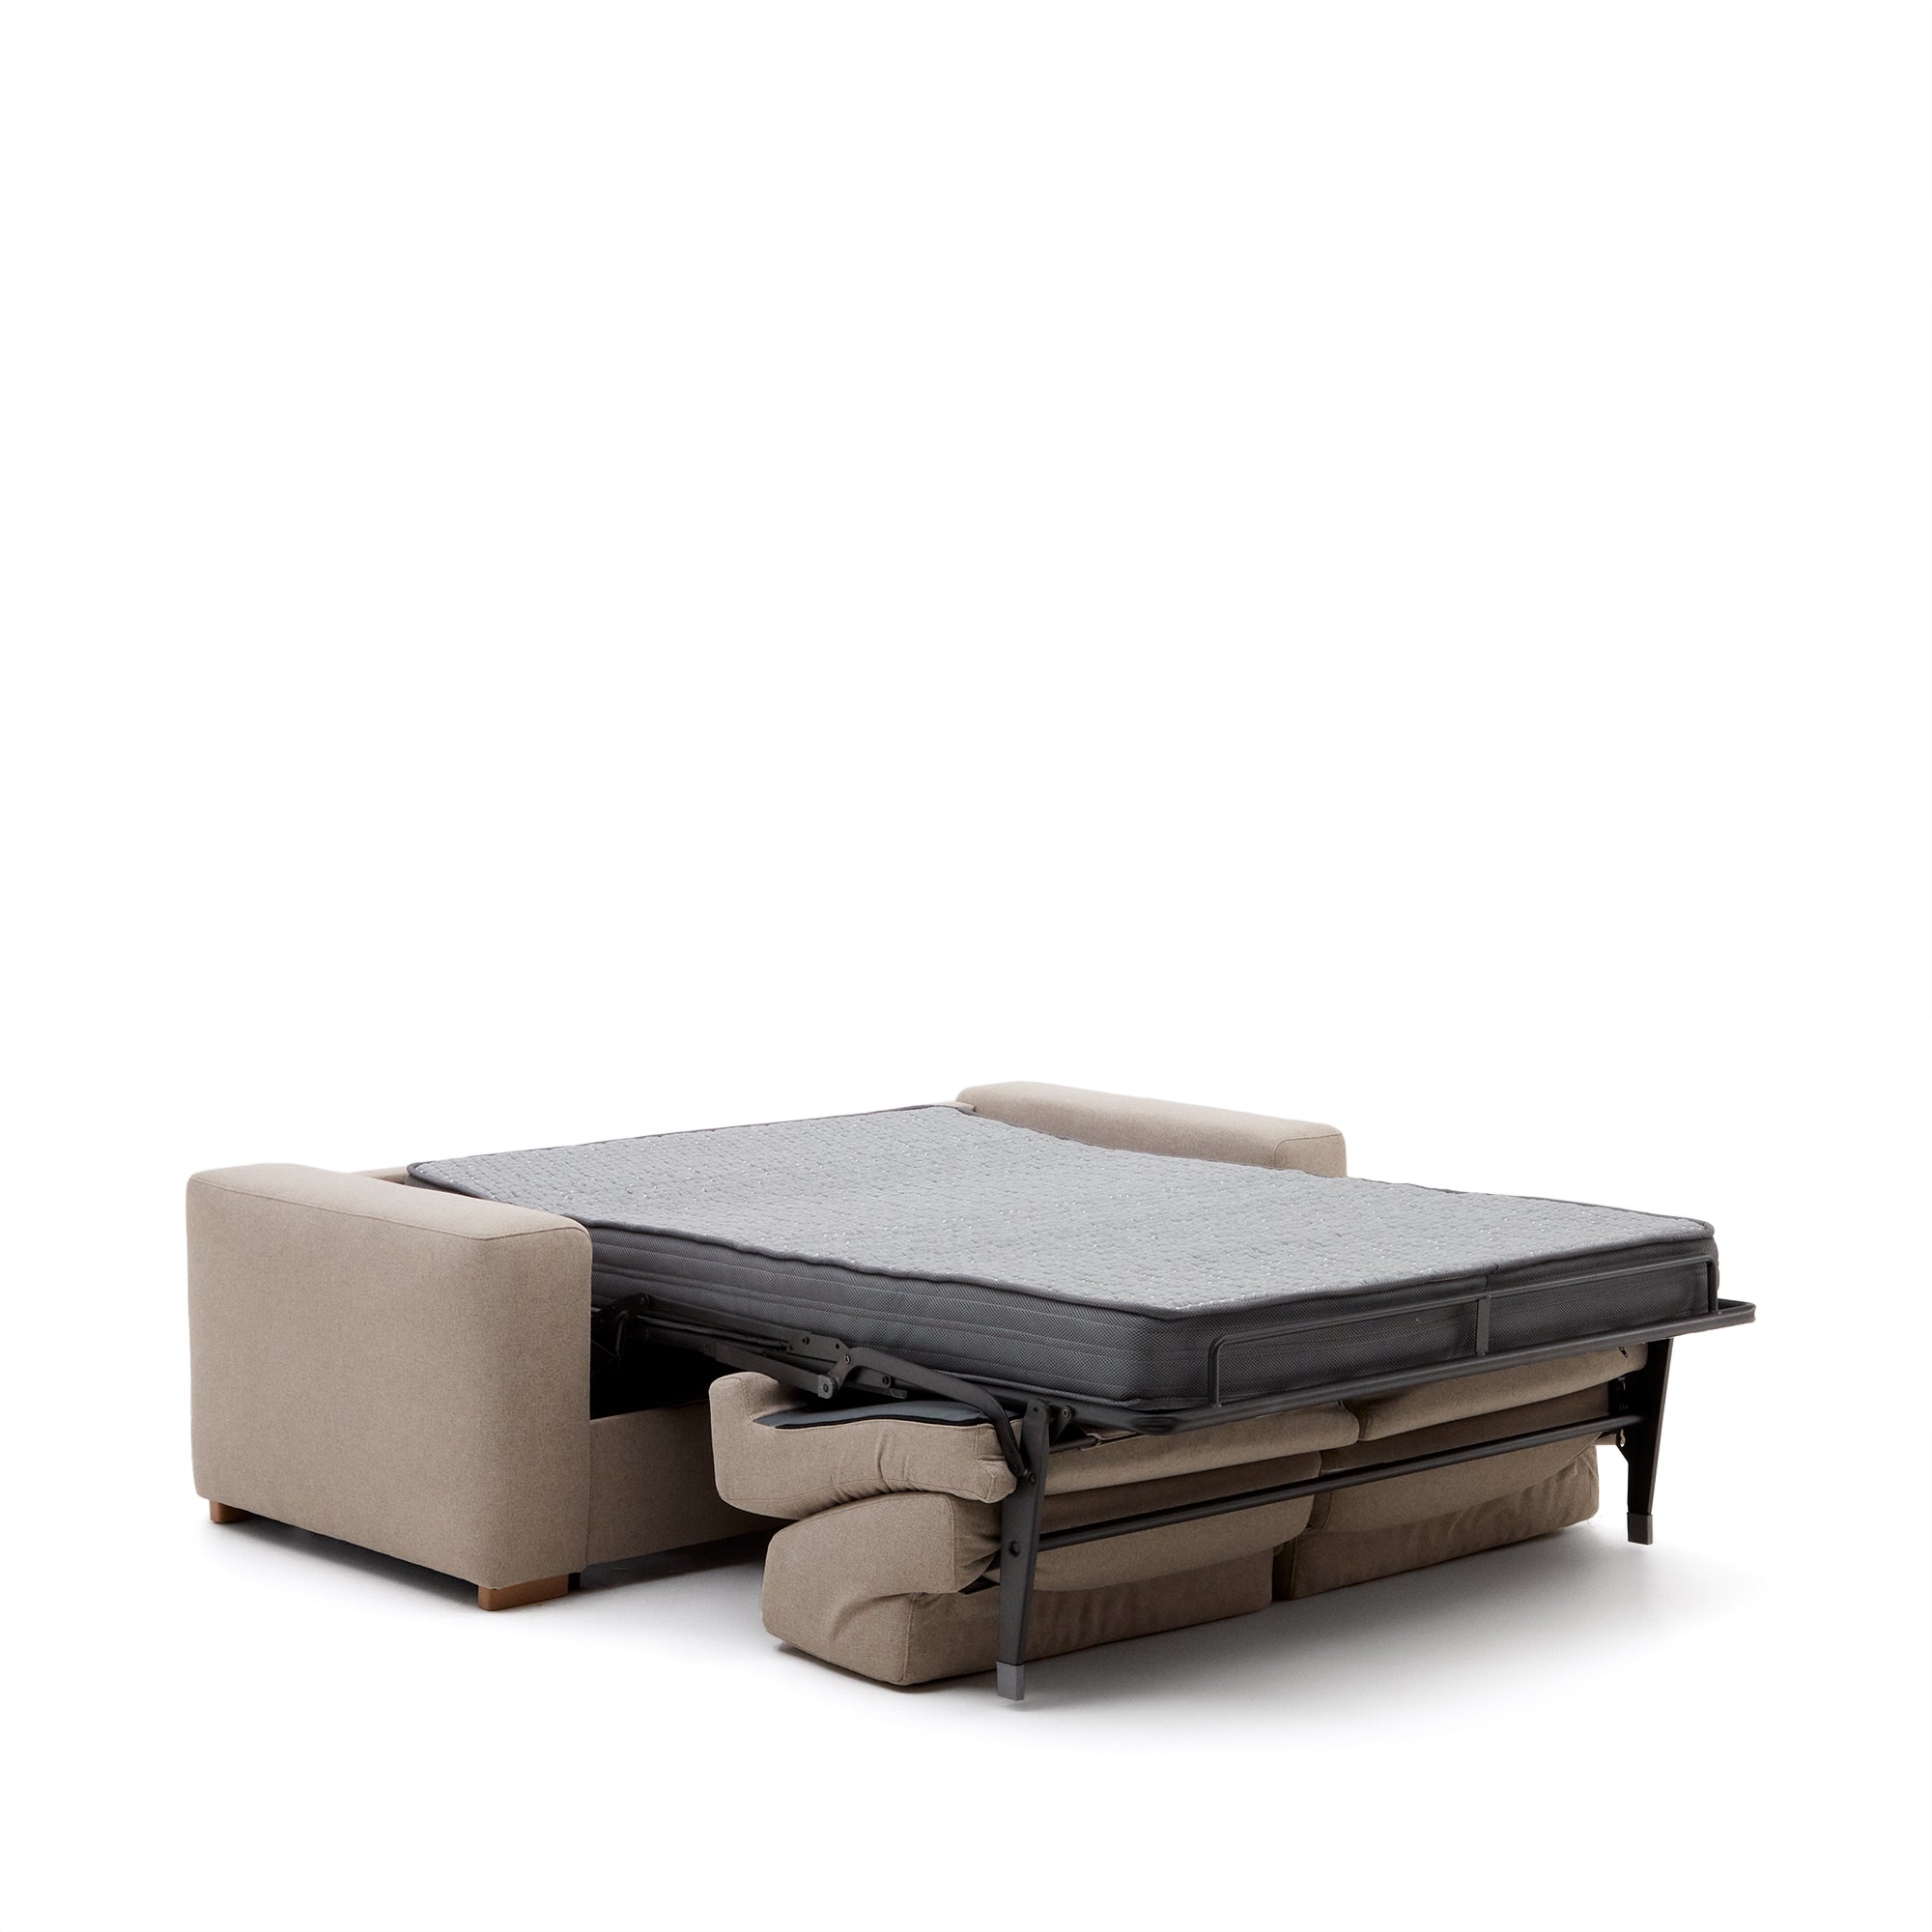 Anley 3-seater sofa bed in beige 204 cm